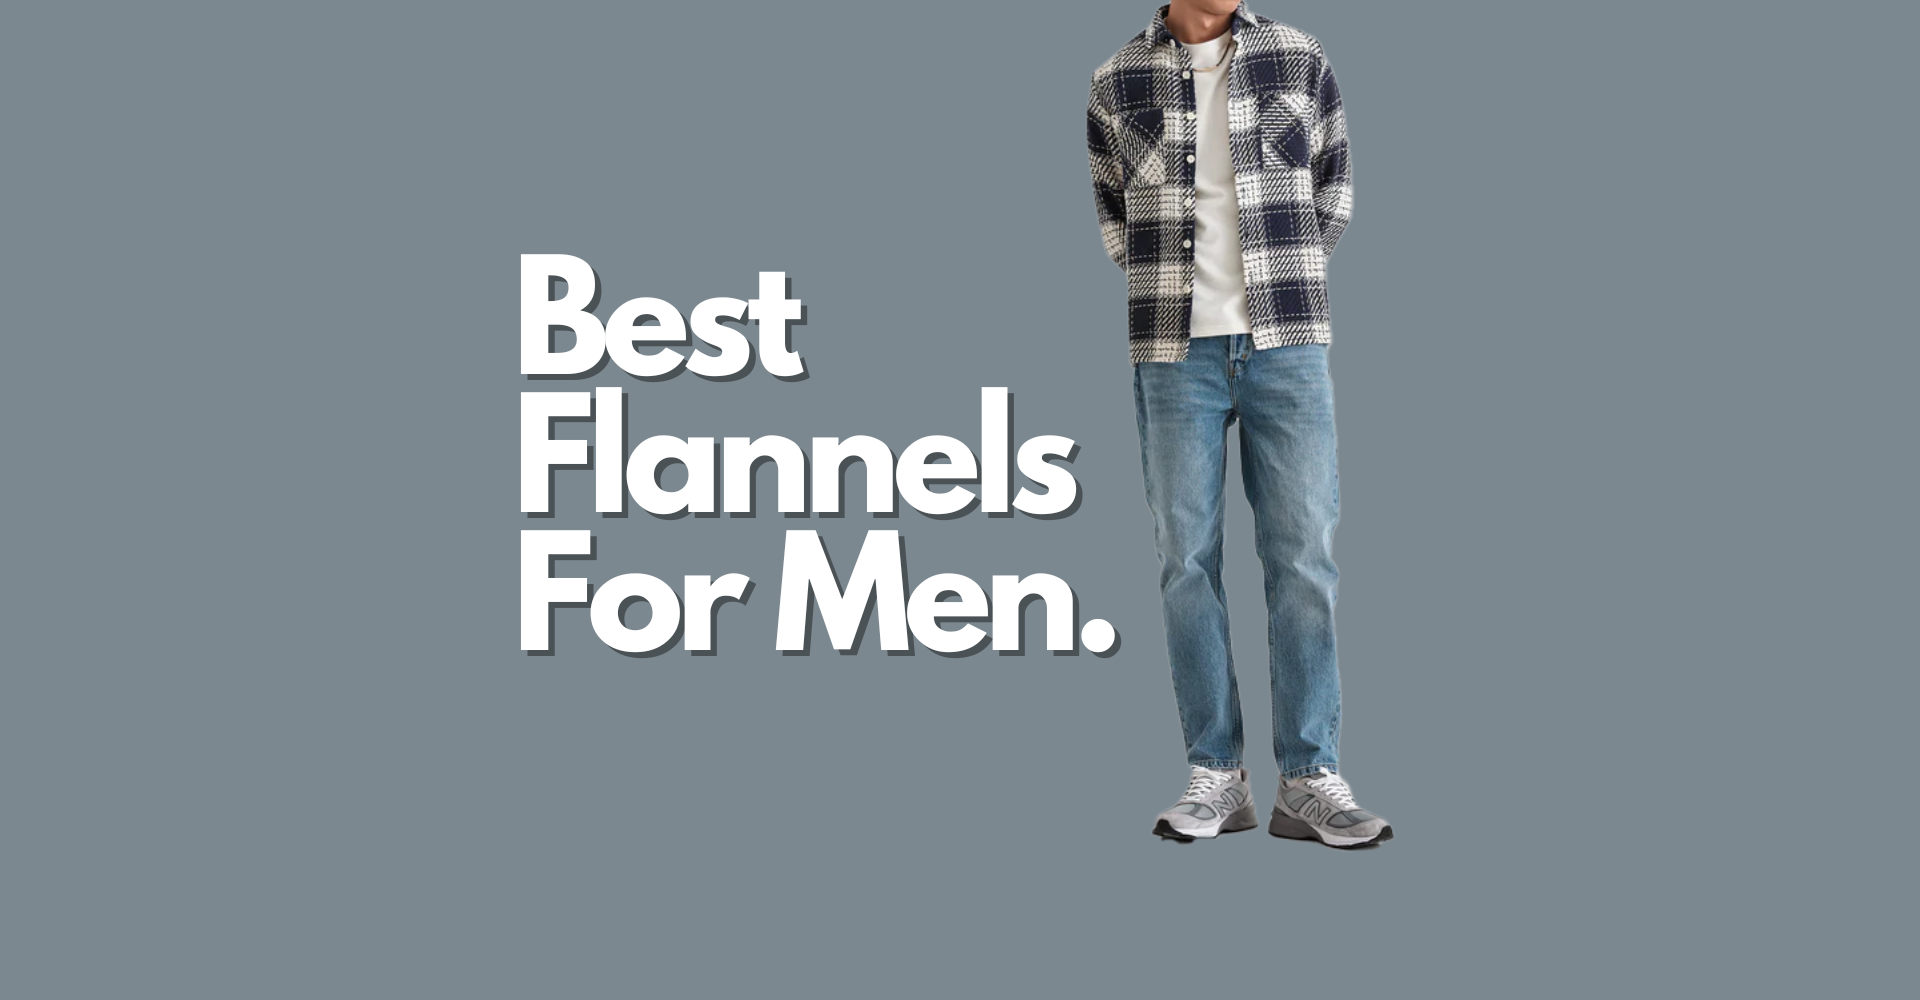 PLAID FLANNEL SHIRT, Men's Streetwear Brand